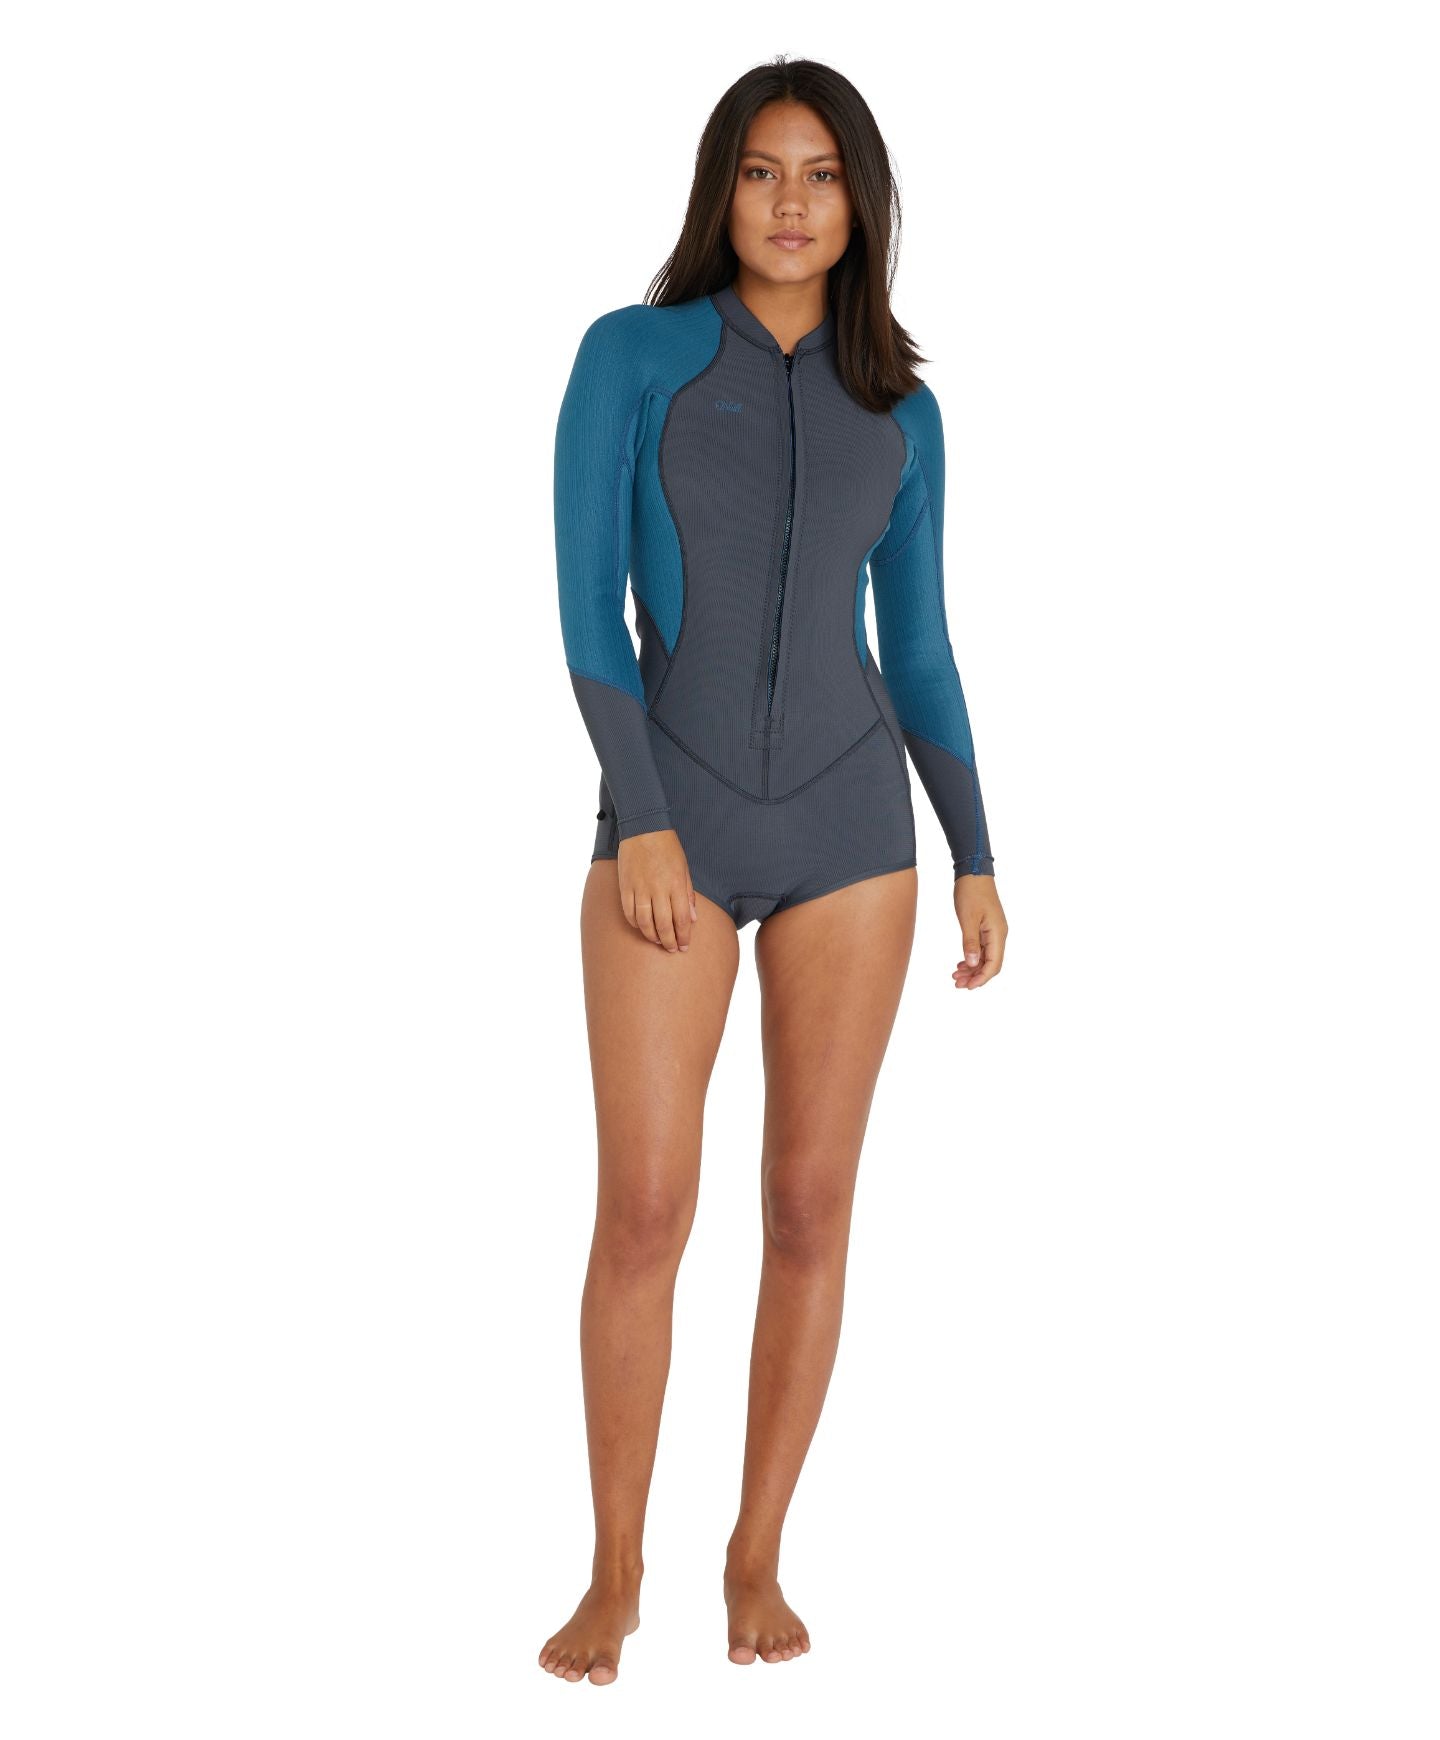 Women's Blueprint Long Sleeve Spring Suit 2mm Wetsuit - Graphite